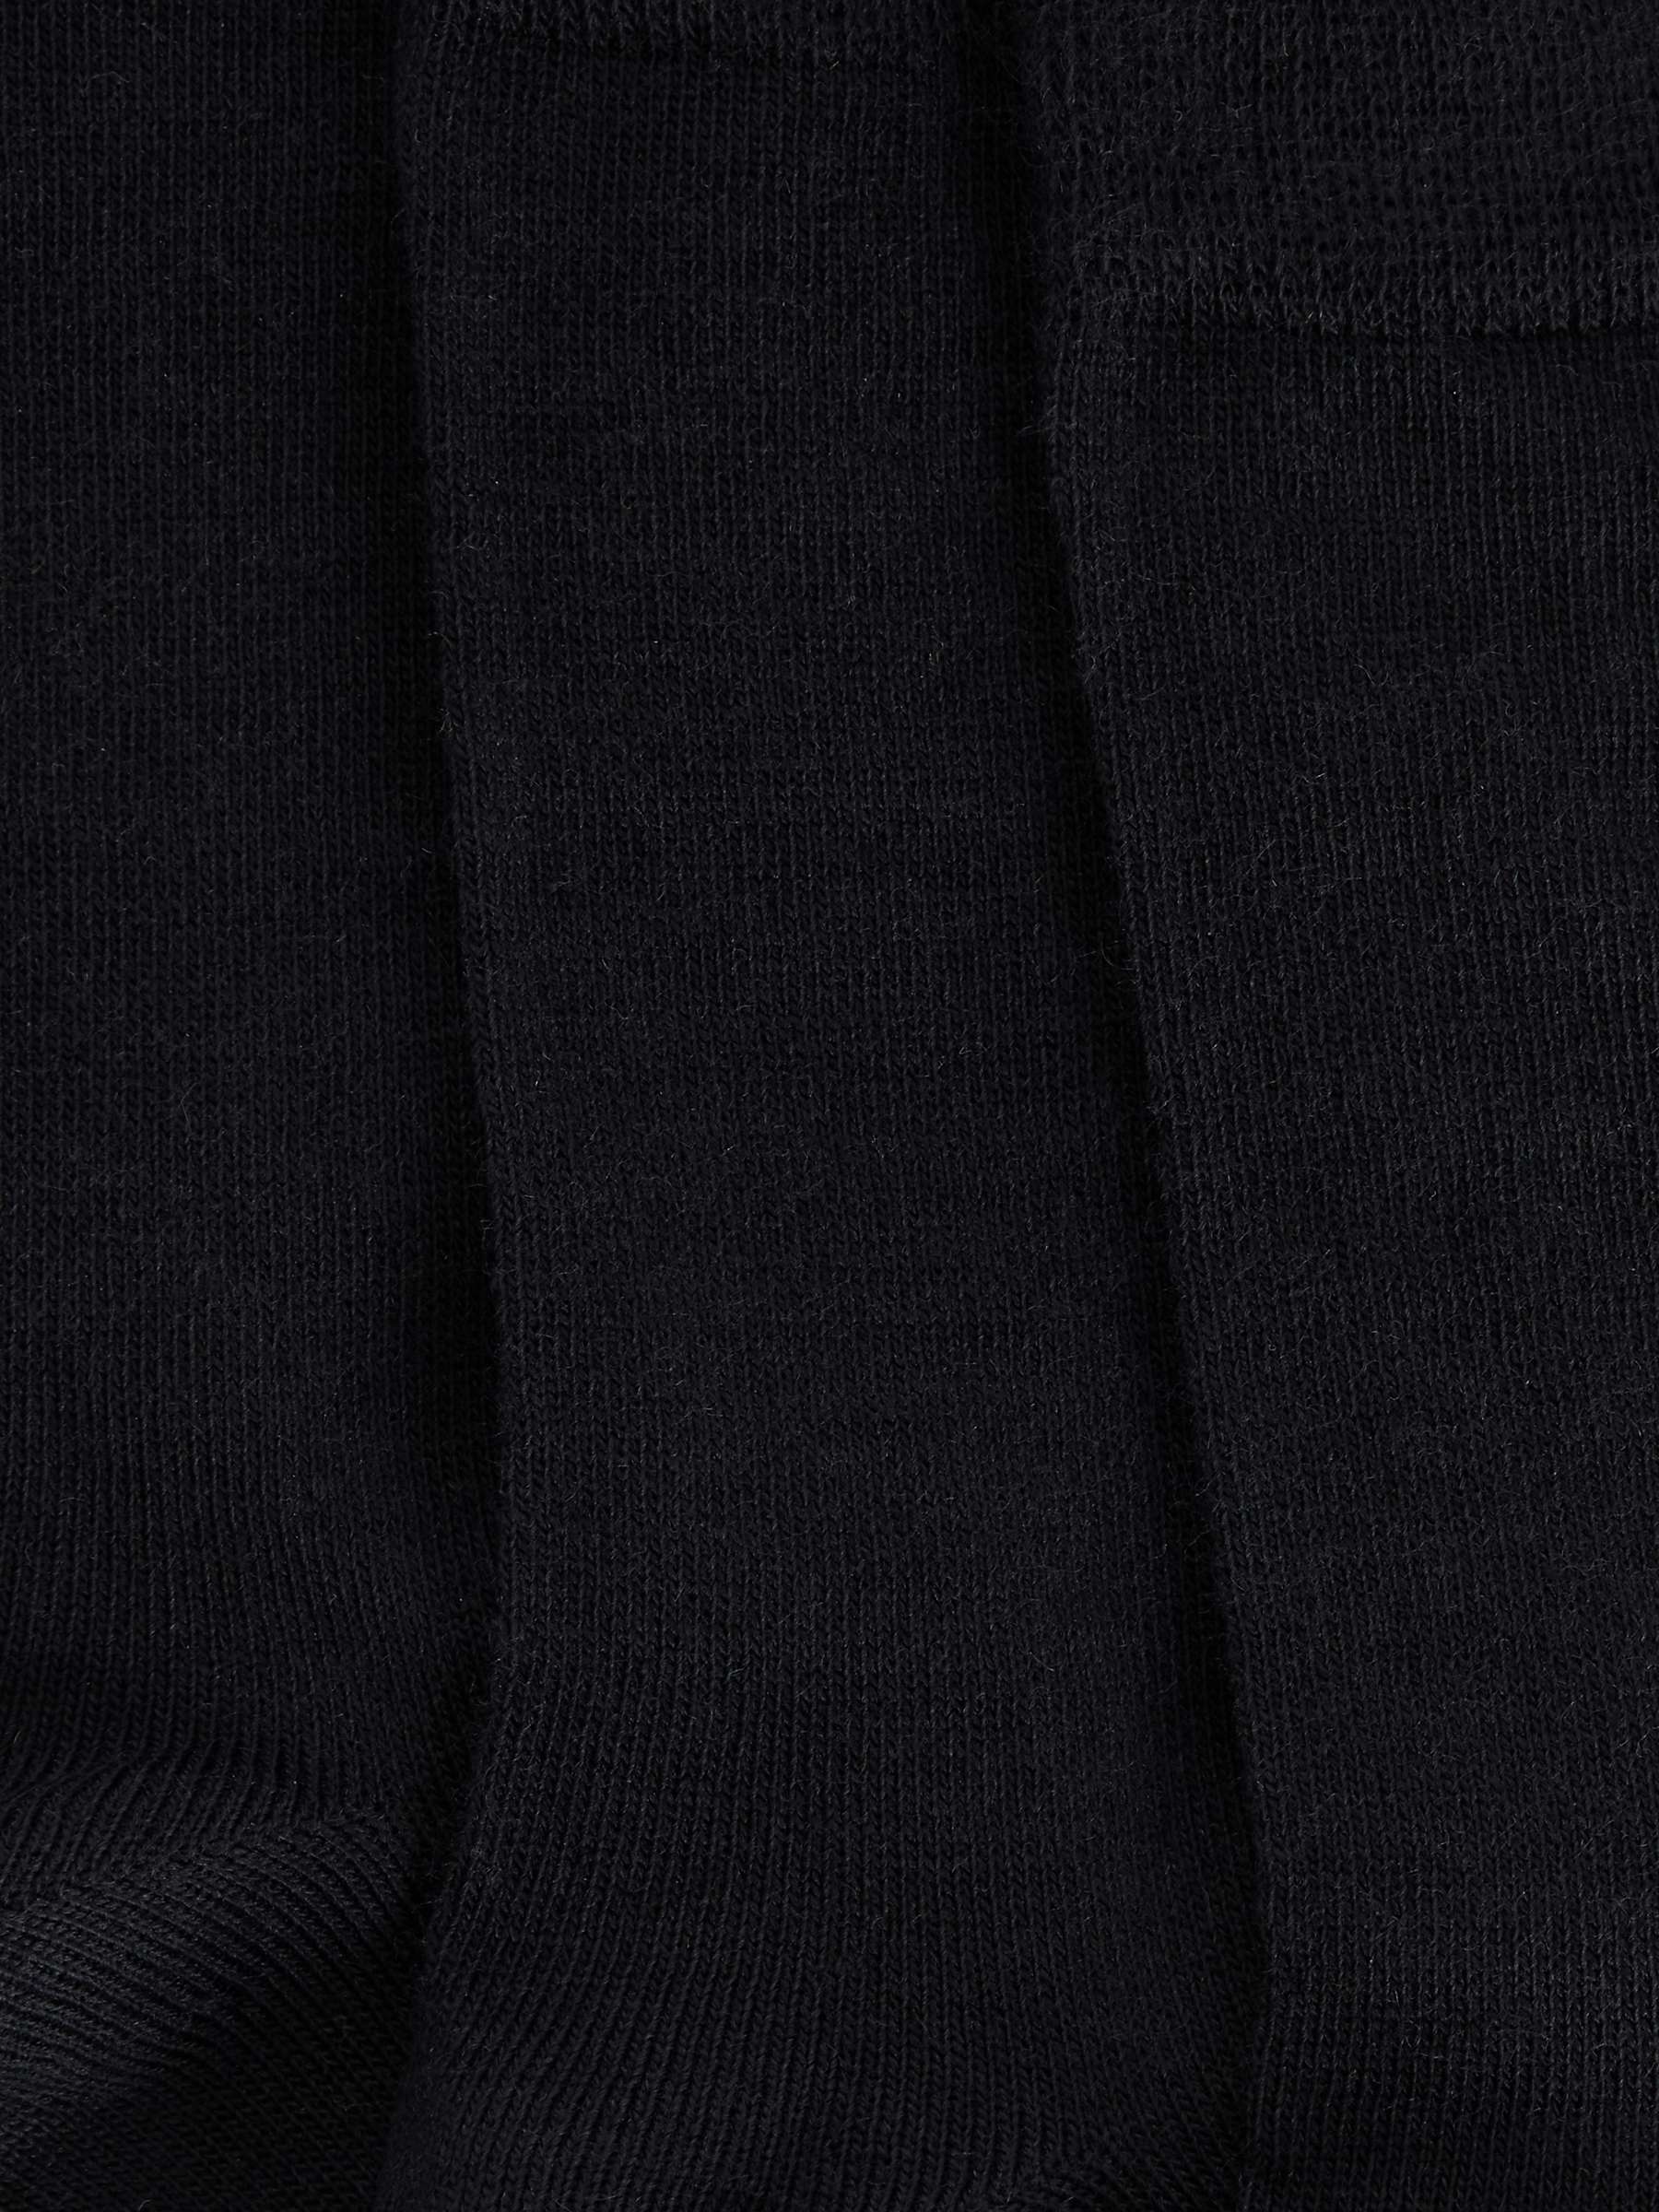 Buy John Lewis Merino Wool Mix Ankle Socks, Pack of 2 Online at johnlewis.com